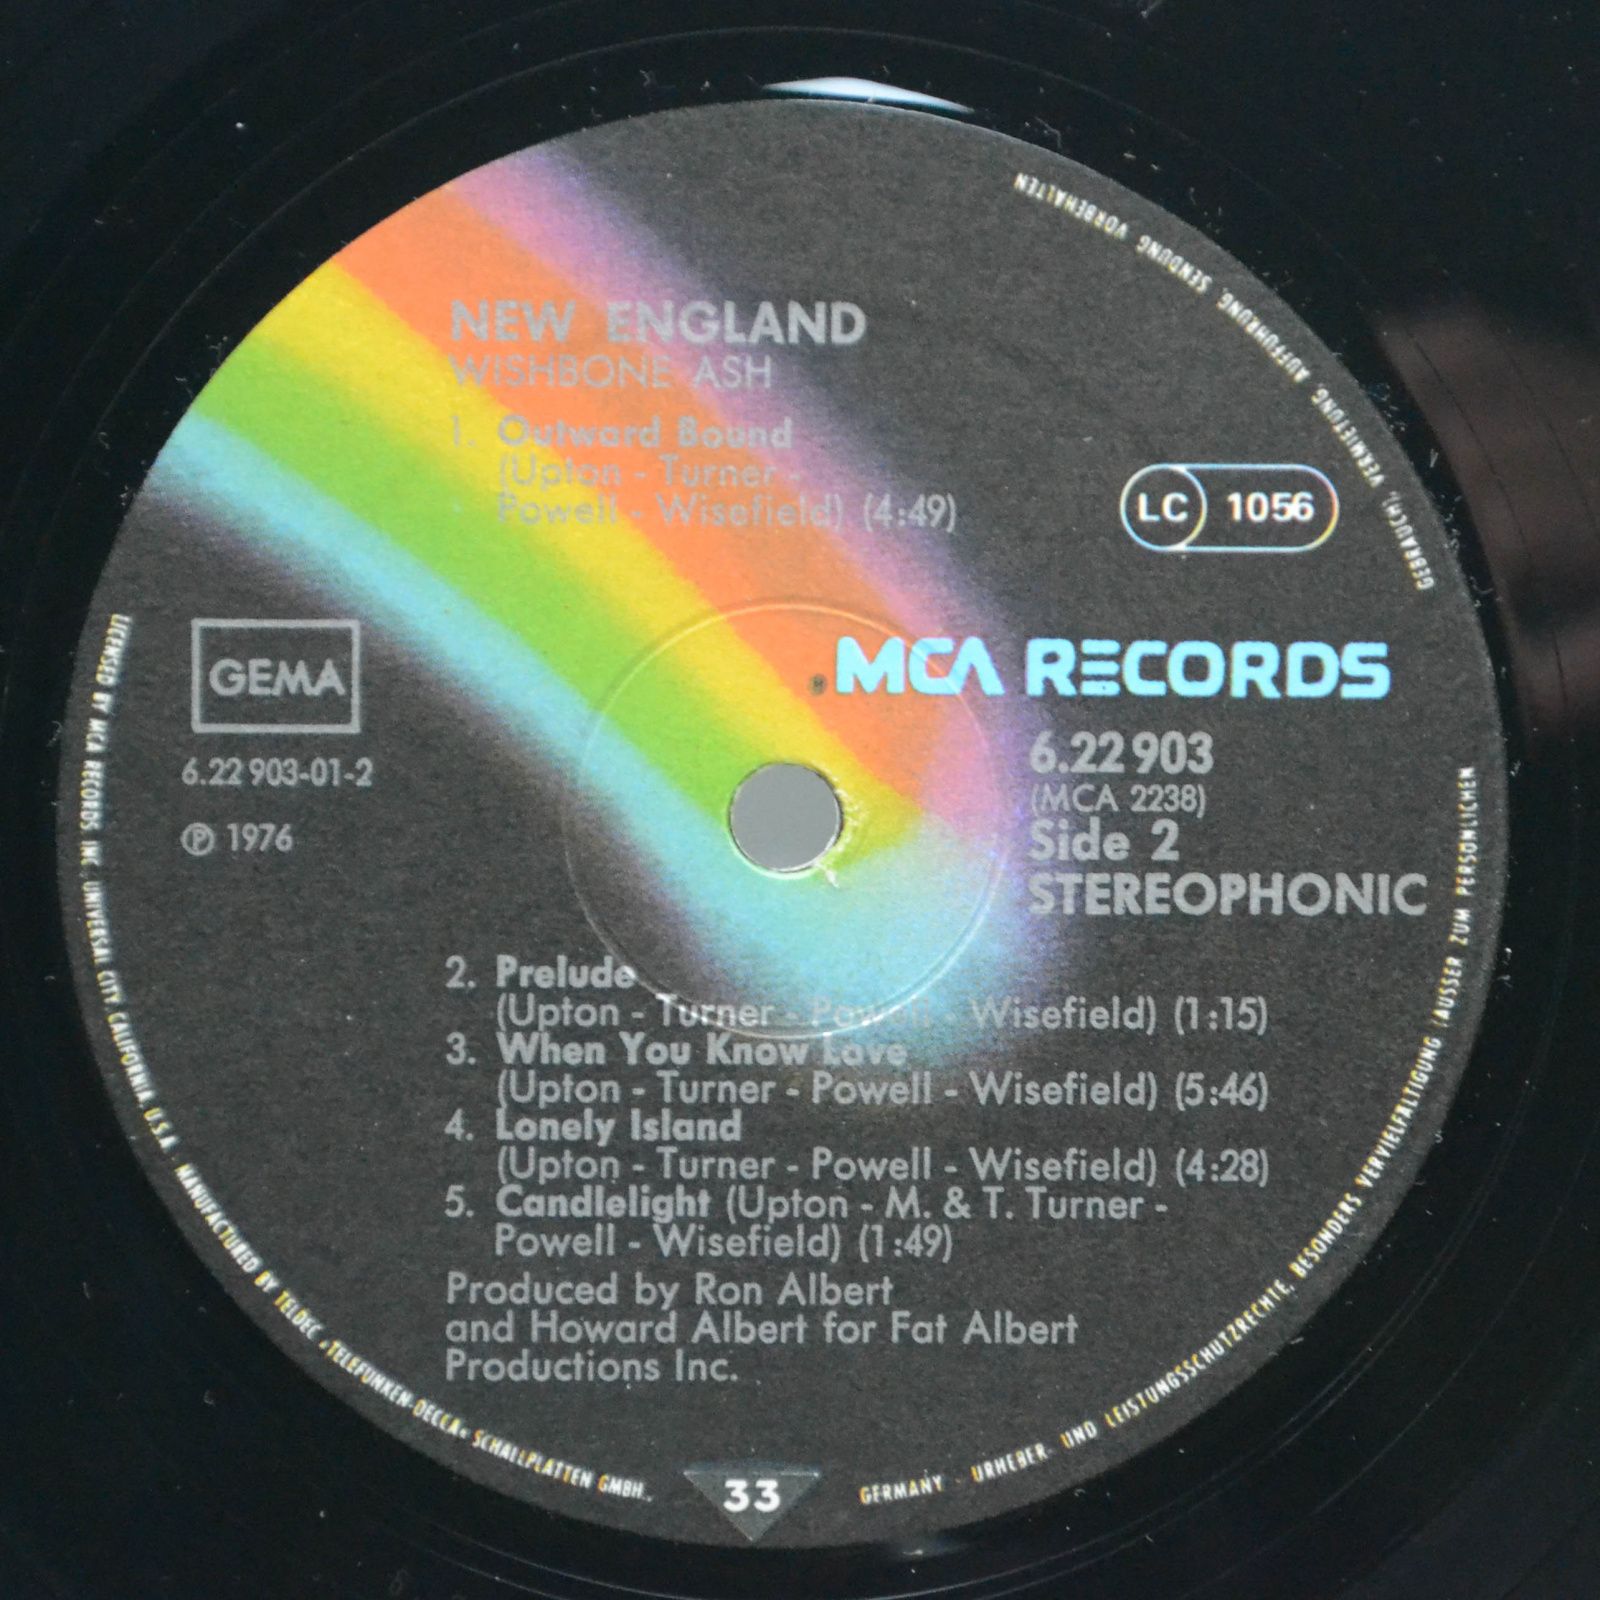 Wishbone Ash — New England, 1976